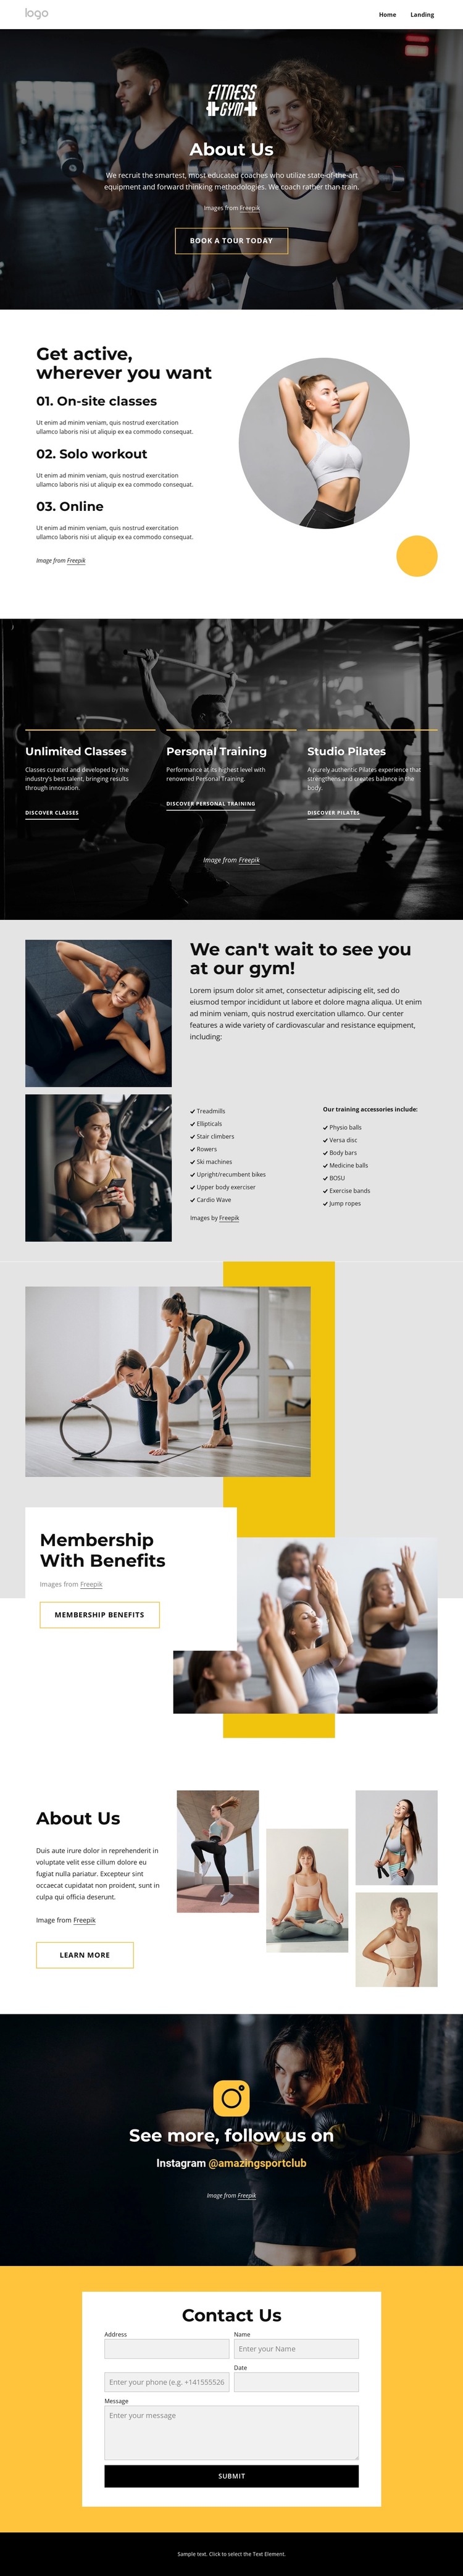 Sport and wellness center WordPress Theme